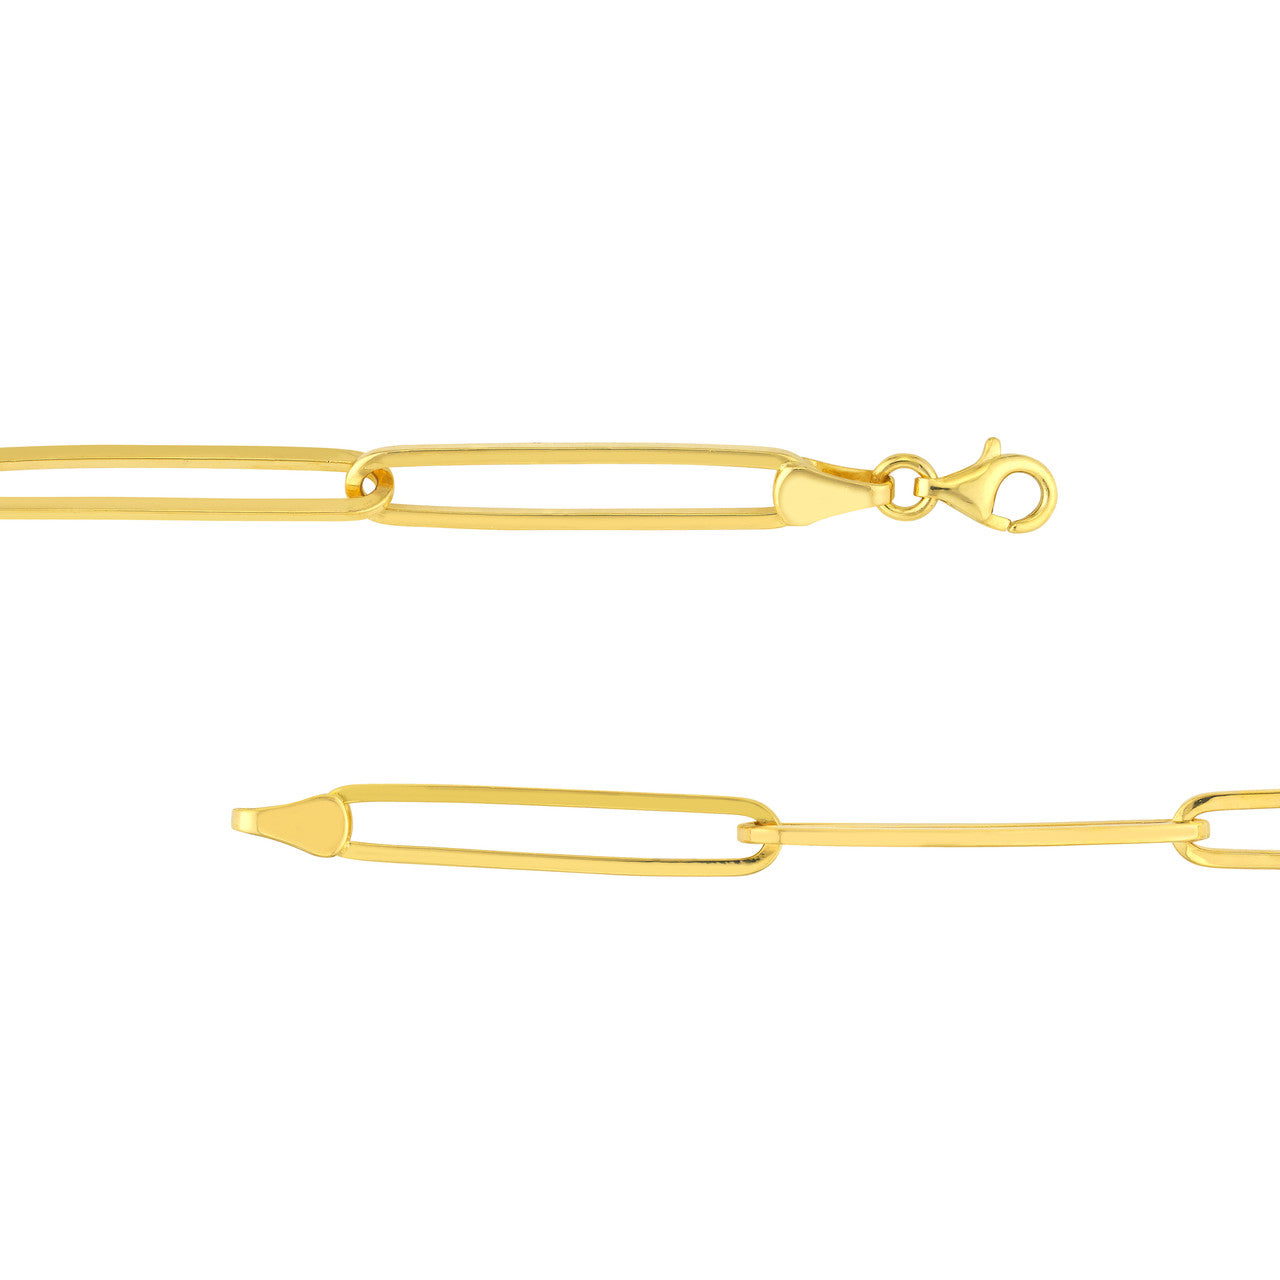 14K Yellow Gold Diamond Sun Round Medallion Paper Clip Chain Lariat Y Necklace